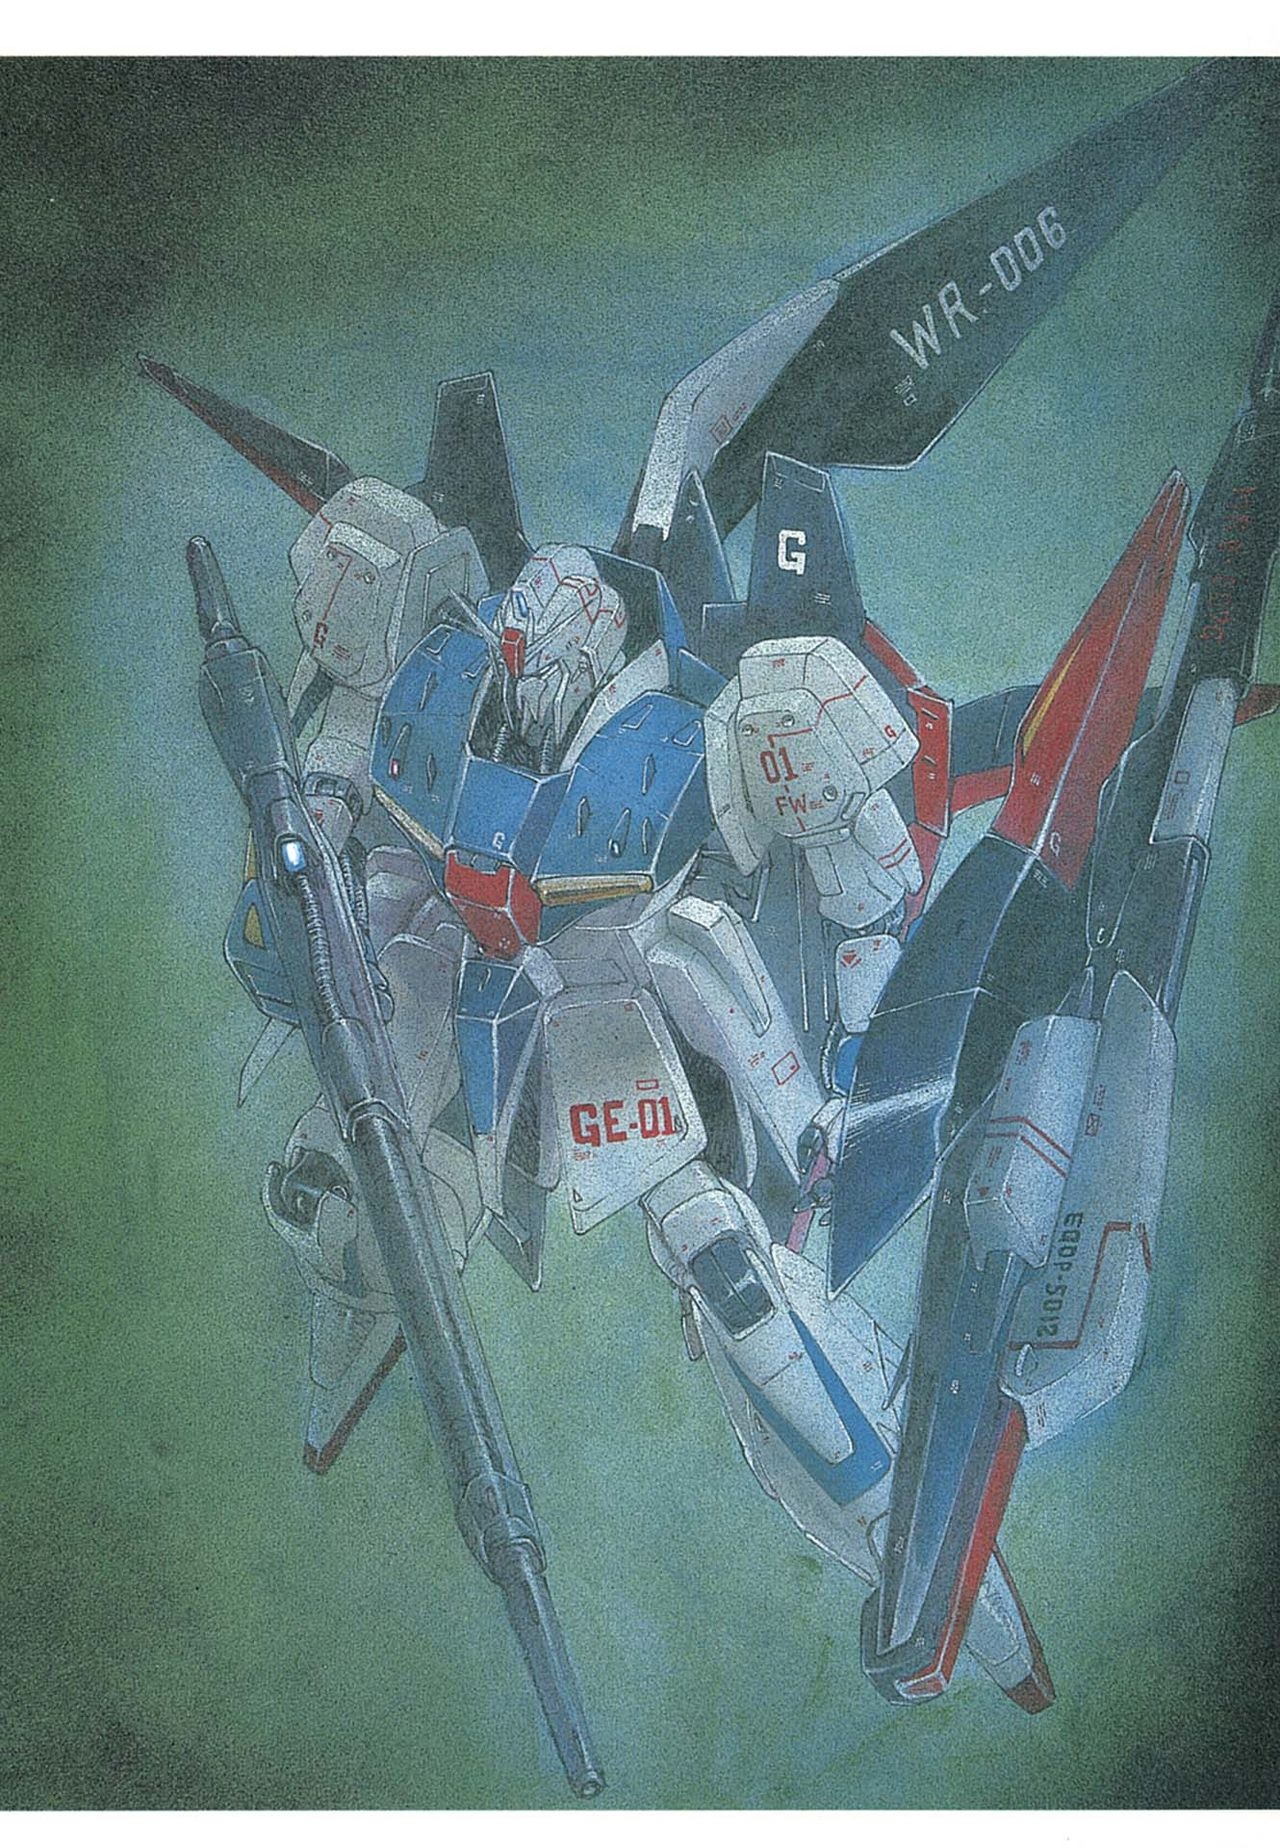 [Kazuhisa Kondo] Kazuhisa Kondo 2D & 3D Works - Go Ahead - From Mobile Suit Gundam to Original Mechanism 37